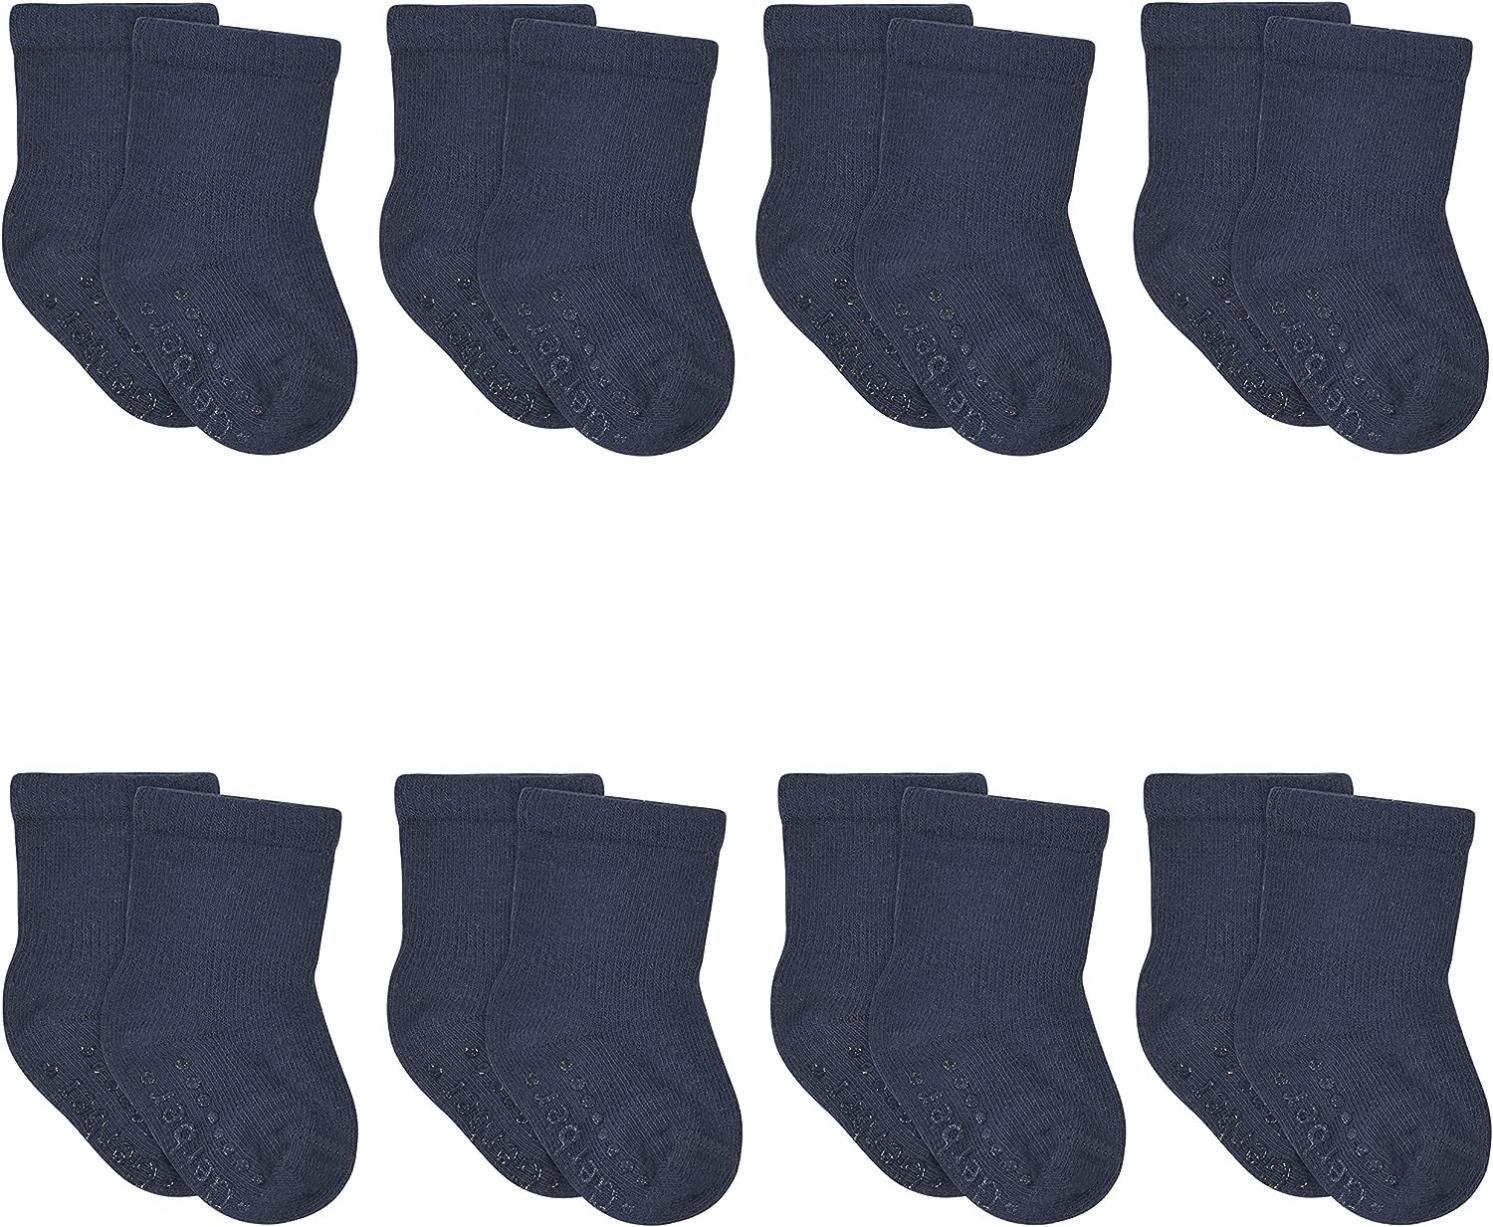 Gerber Baby 8-Pack Wiggle-Proof Jersey Crew Socks